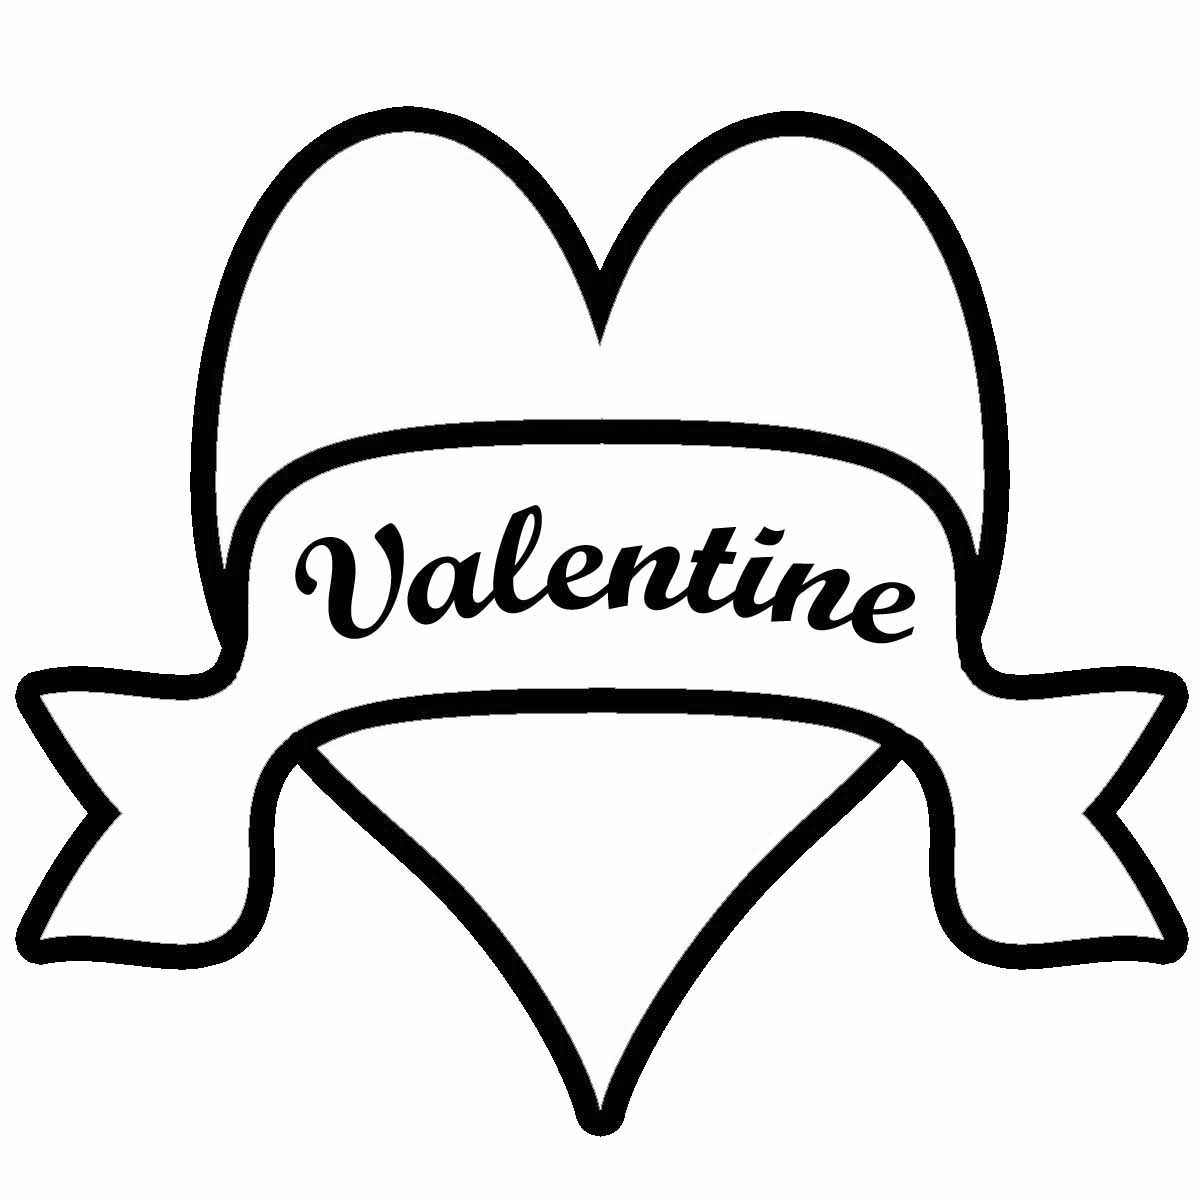 Valentine Clip Art Black and White 2014 | Download Free Word ...